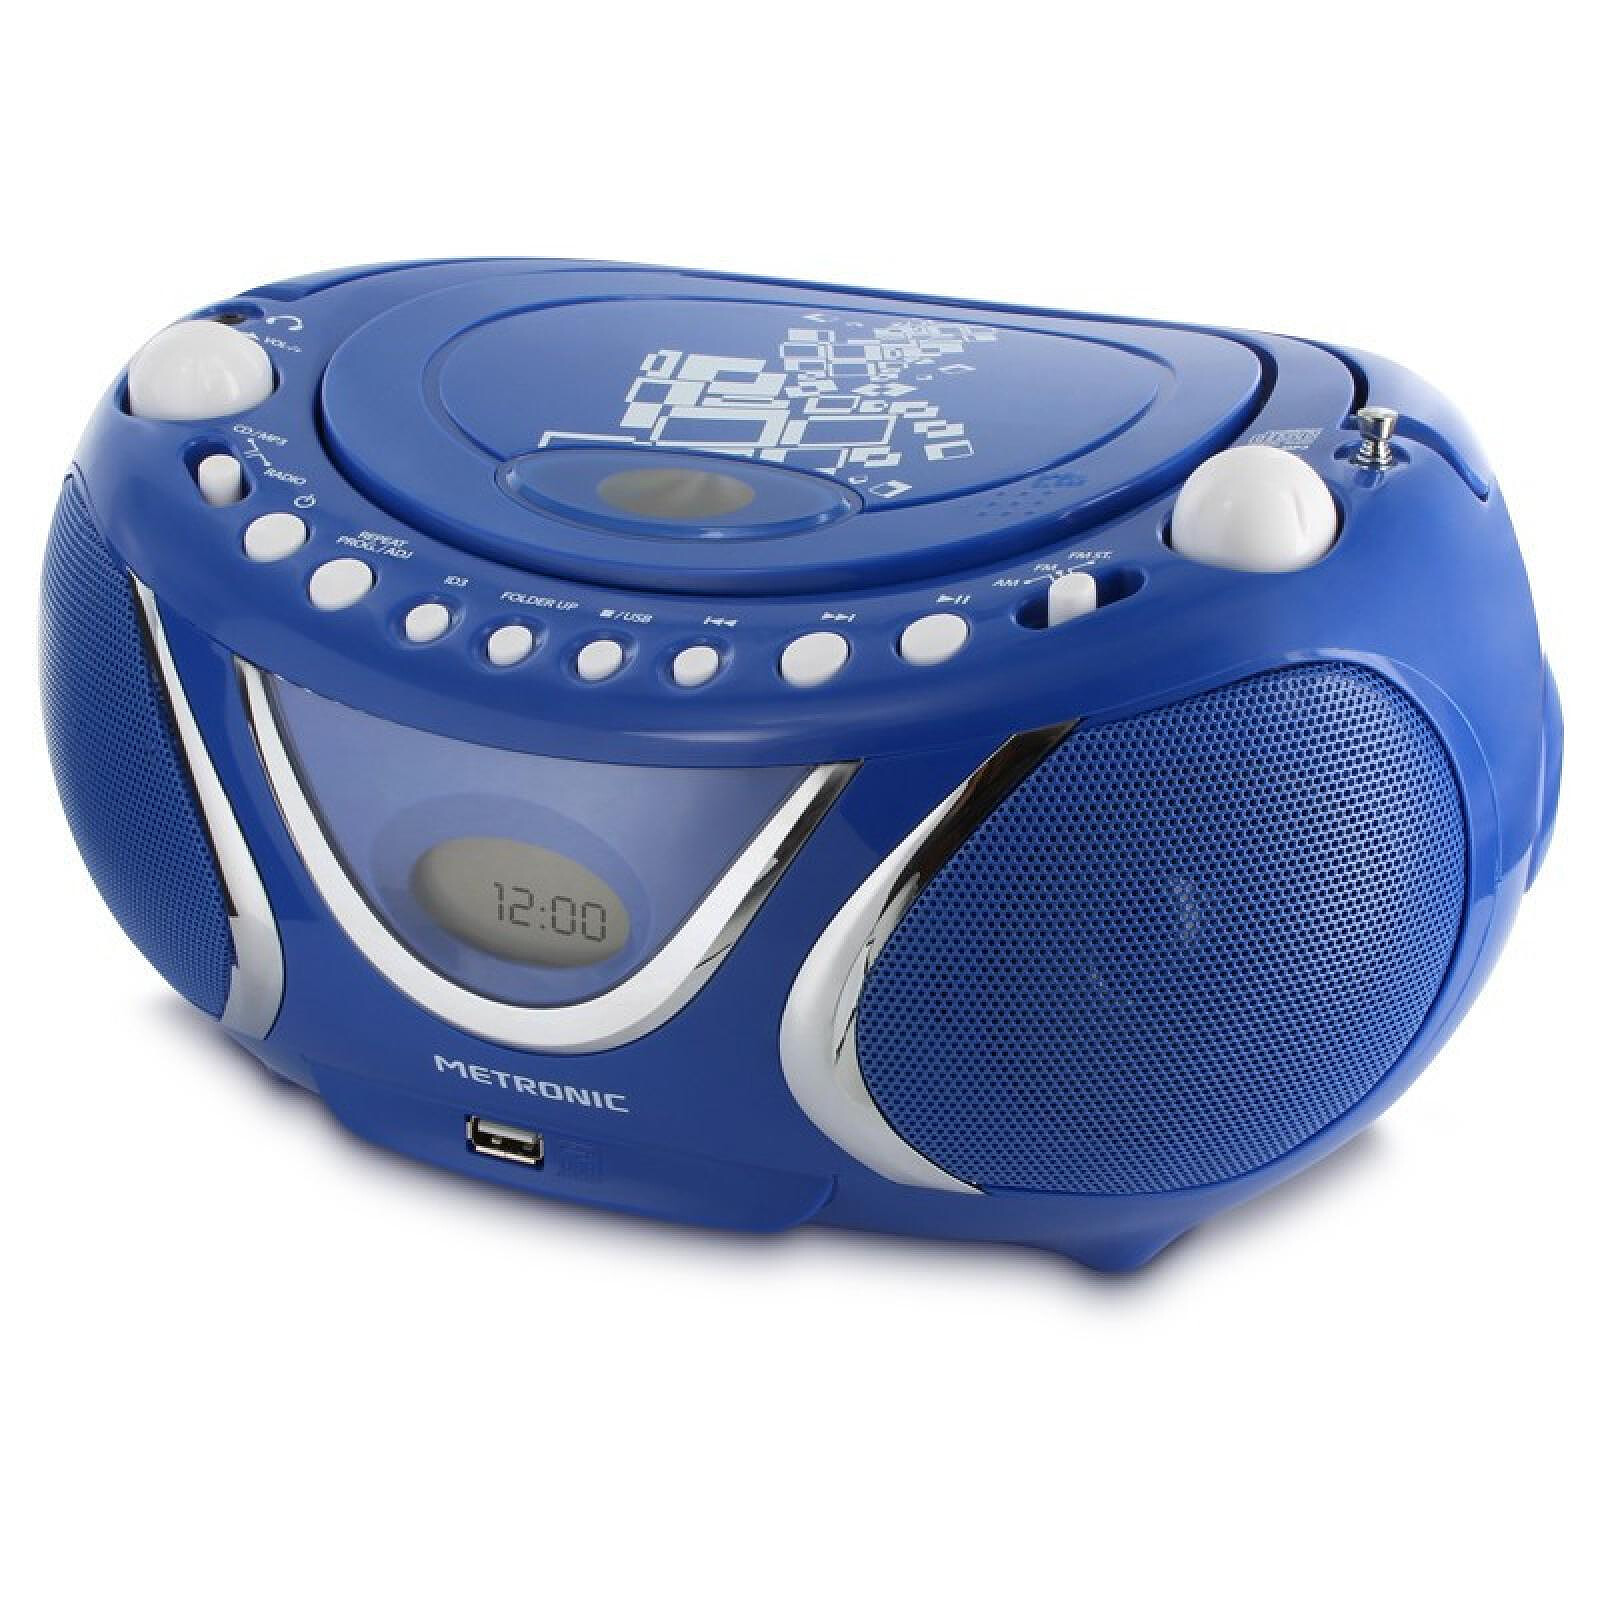 Metronic - radio Réveil Enfant Sportsman MP3 USB avec projection